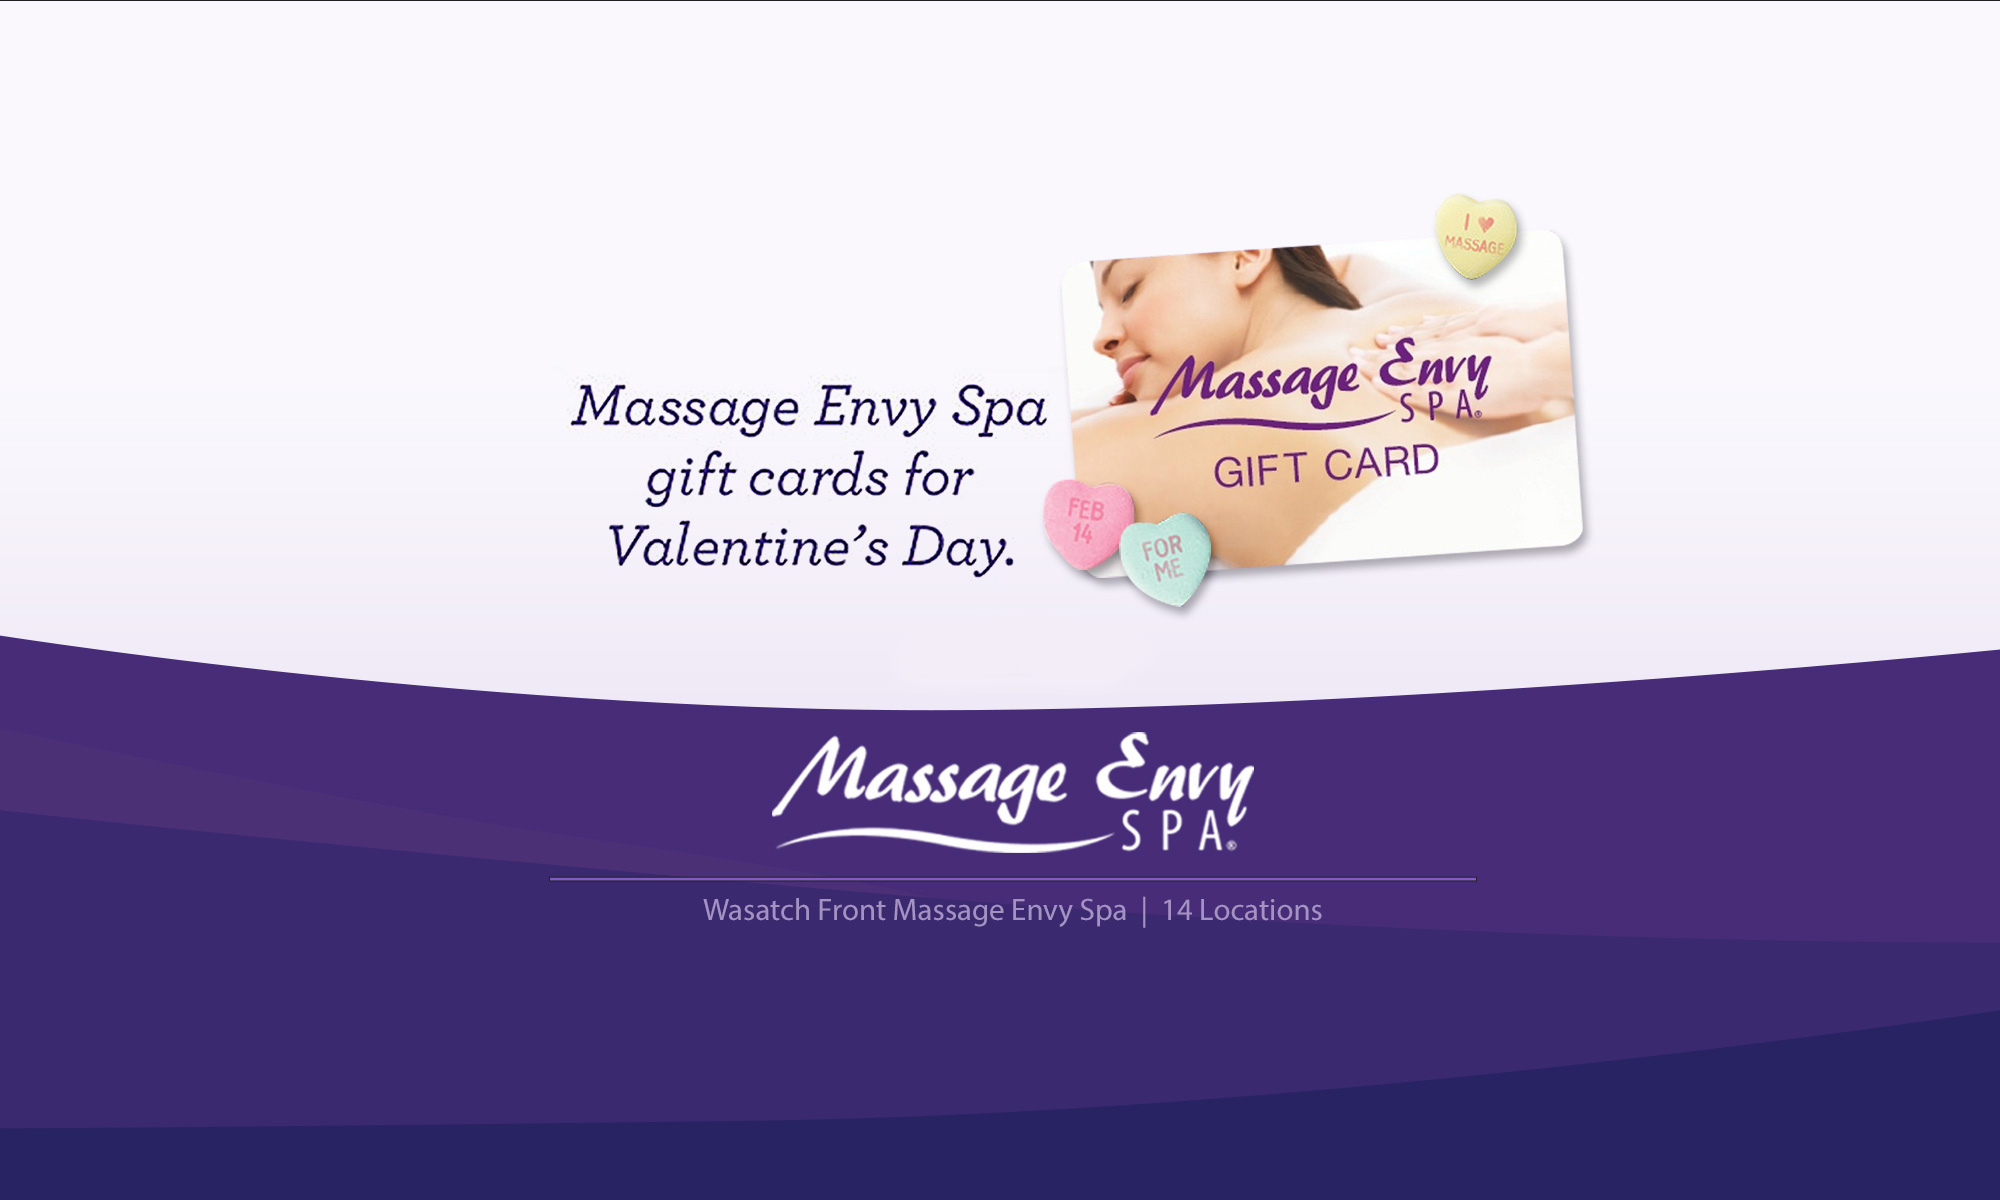 massage-envy-spa-valentine-giveaway-x96